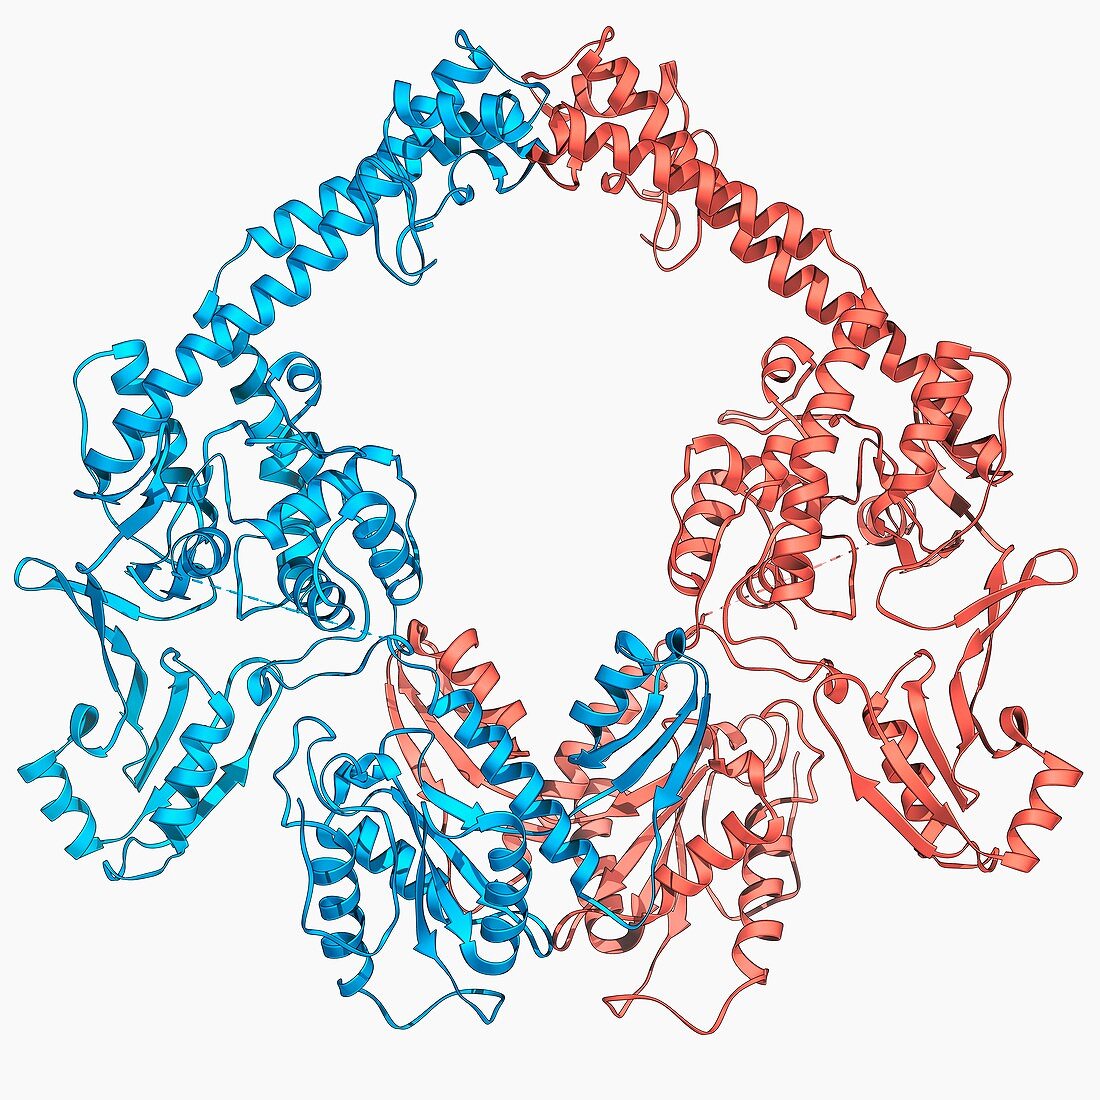 Type II topoisomerase molecule